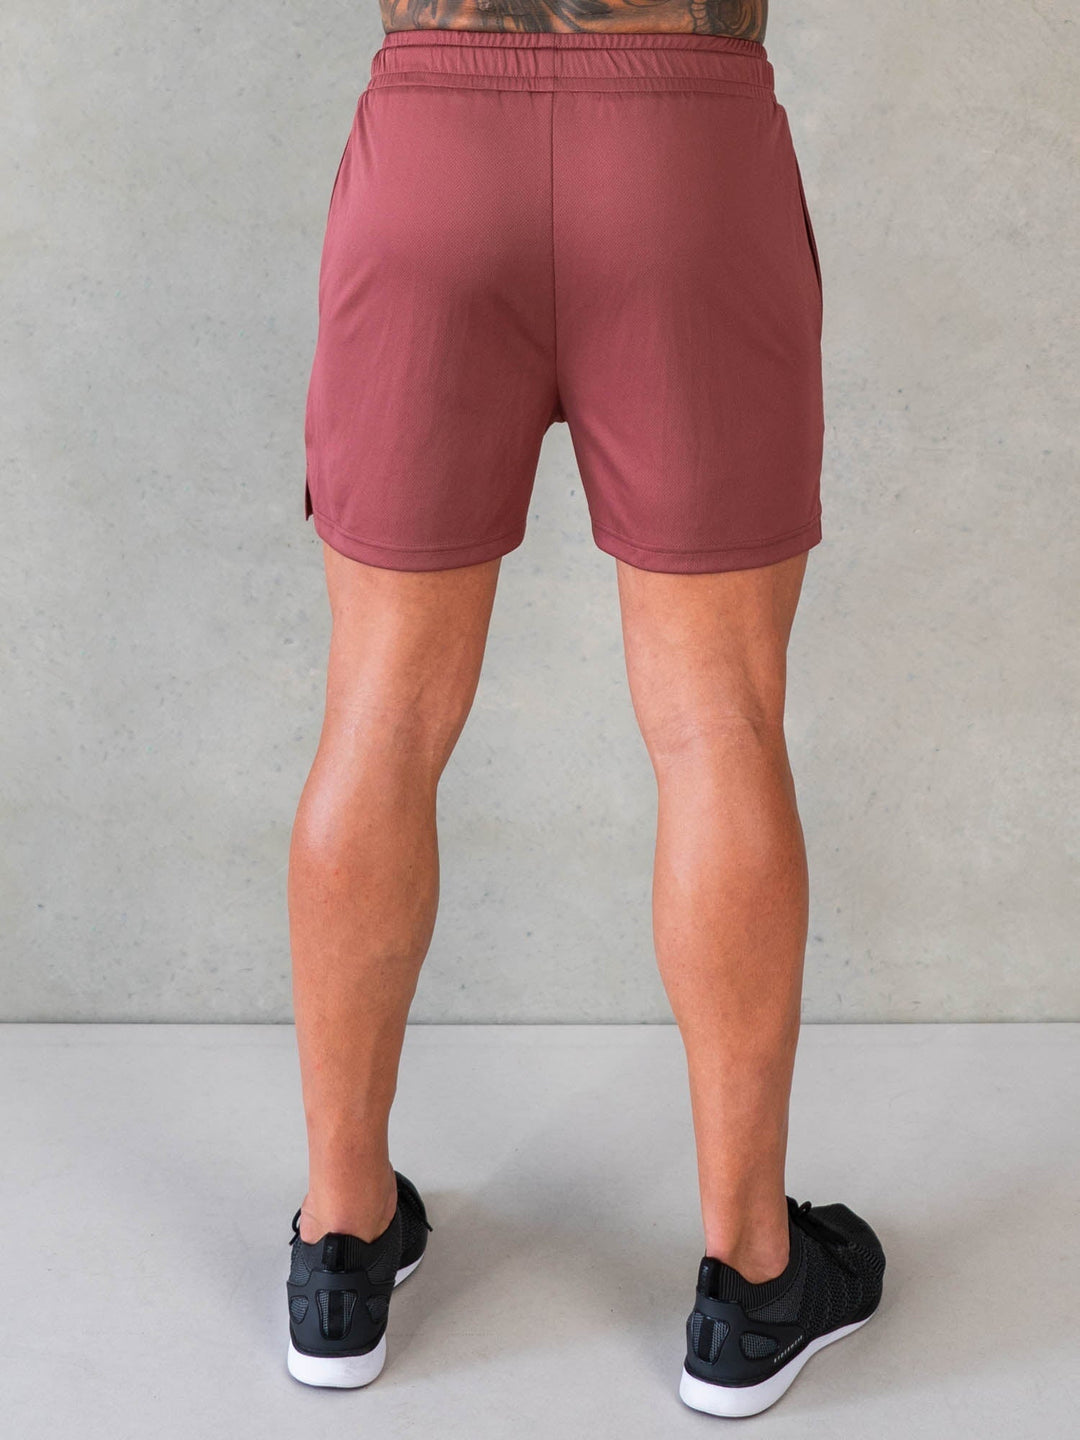 Octane Mesh Shorts - Red Oxide Clothing Ryderwear 